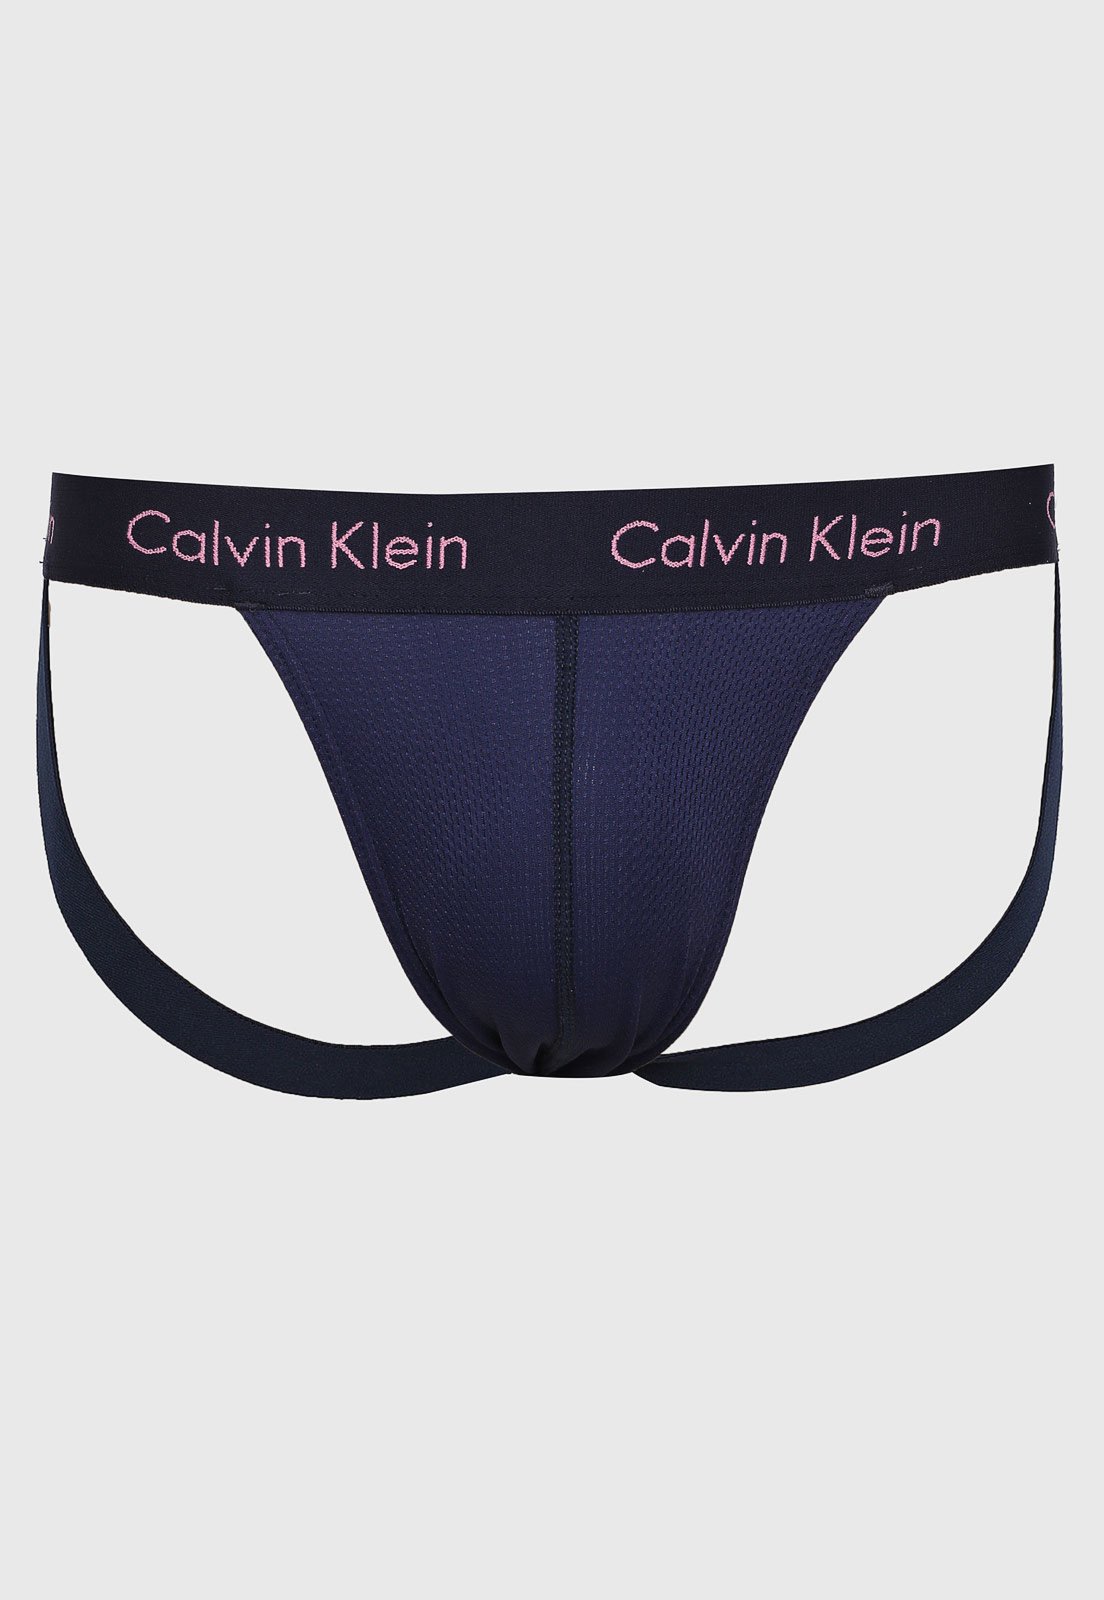 https://static.dafiti.com.br/p/Calvin-Klein-Underwear-Cueca-Calvin-Klein-Underwear-Jockstrap-Azul-Marinho/Rosa-6519-9317547-1-zoom.jpg